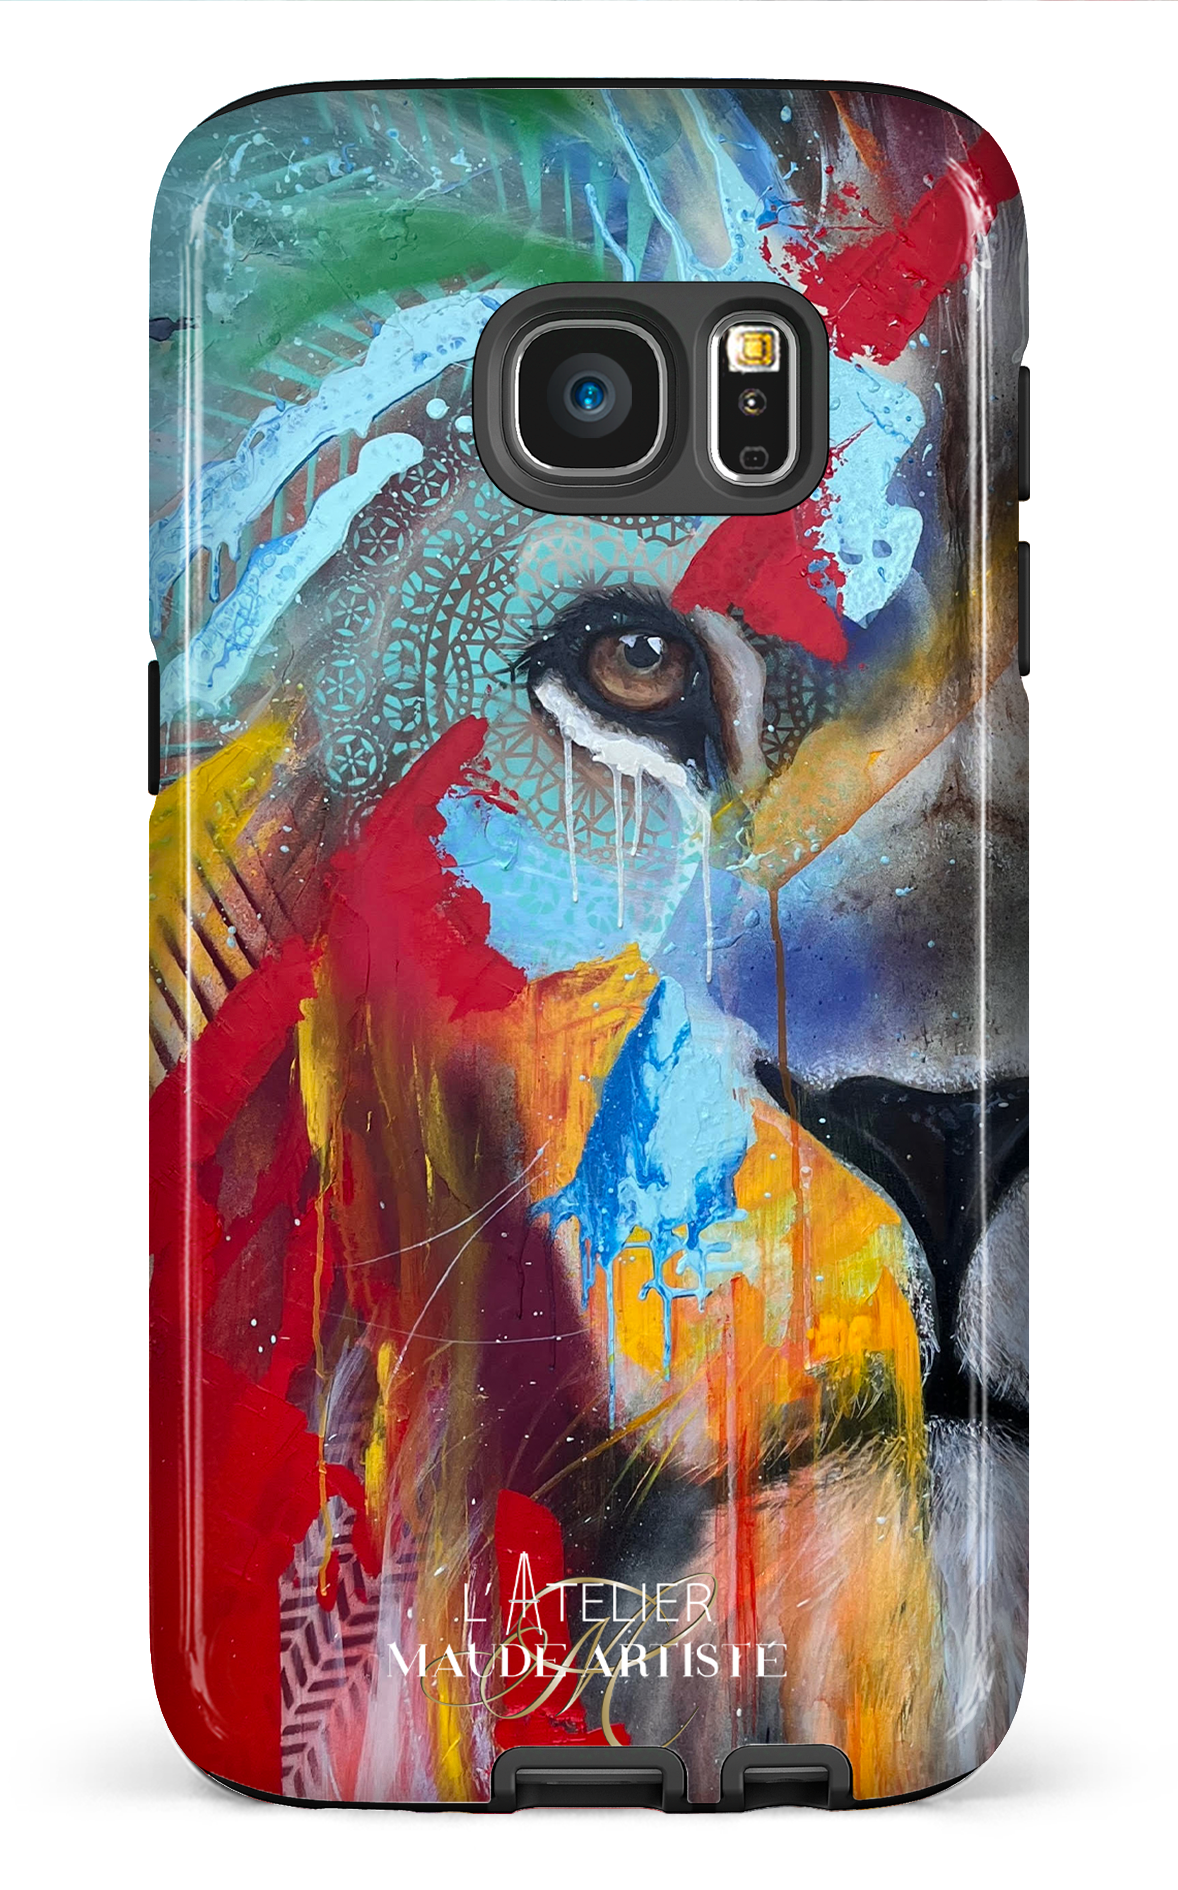 A - Phone Case - Template - Galaxy S7